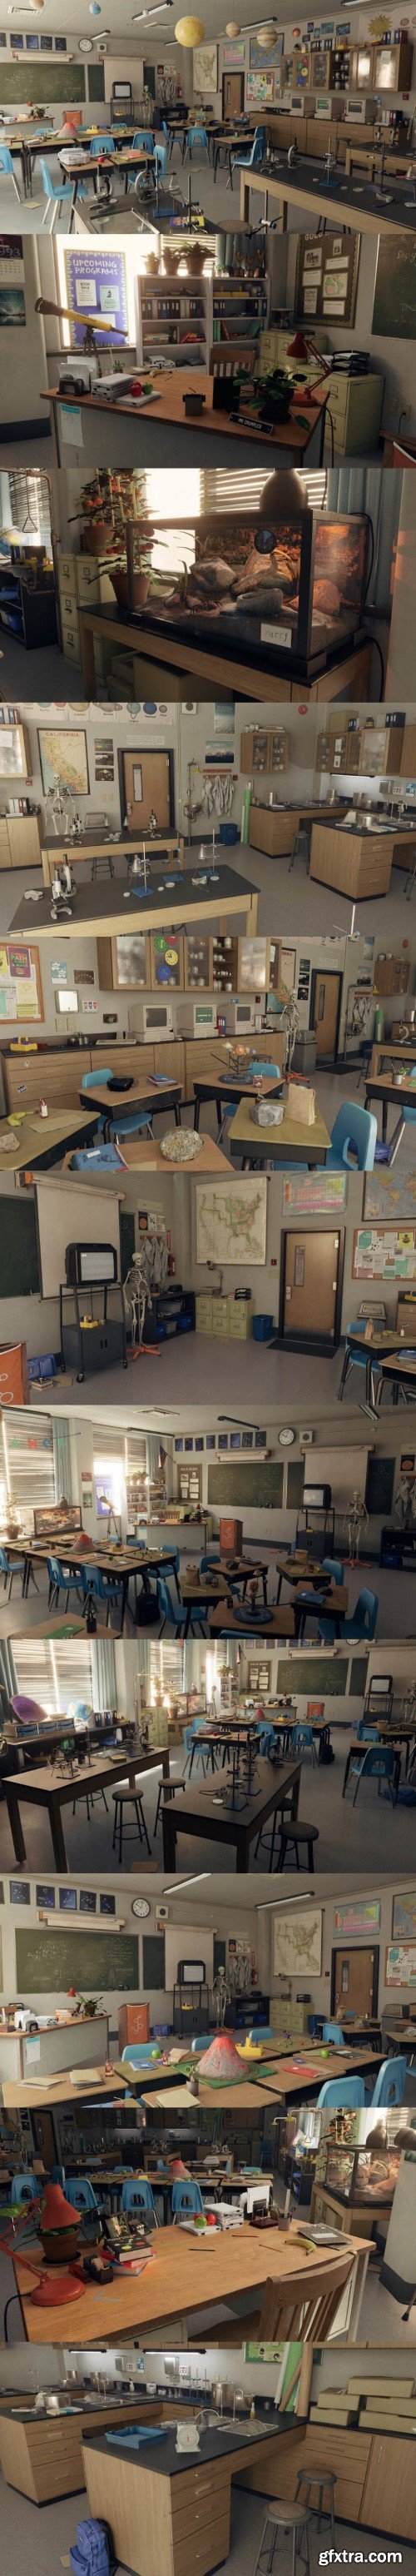 Unreal Engine - High School Science Lab Classroom 4.18-4.27, 5.0-5.3